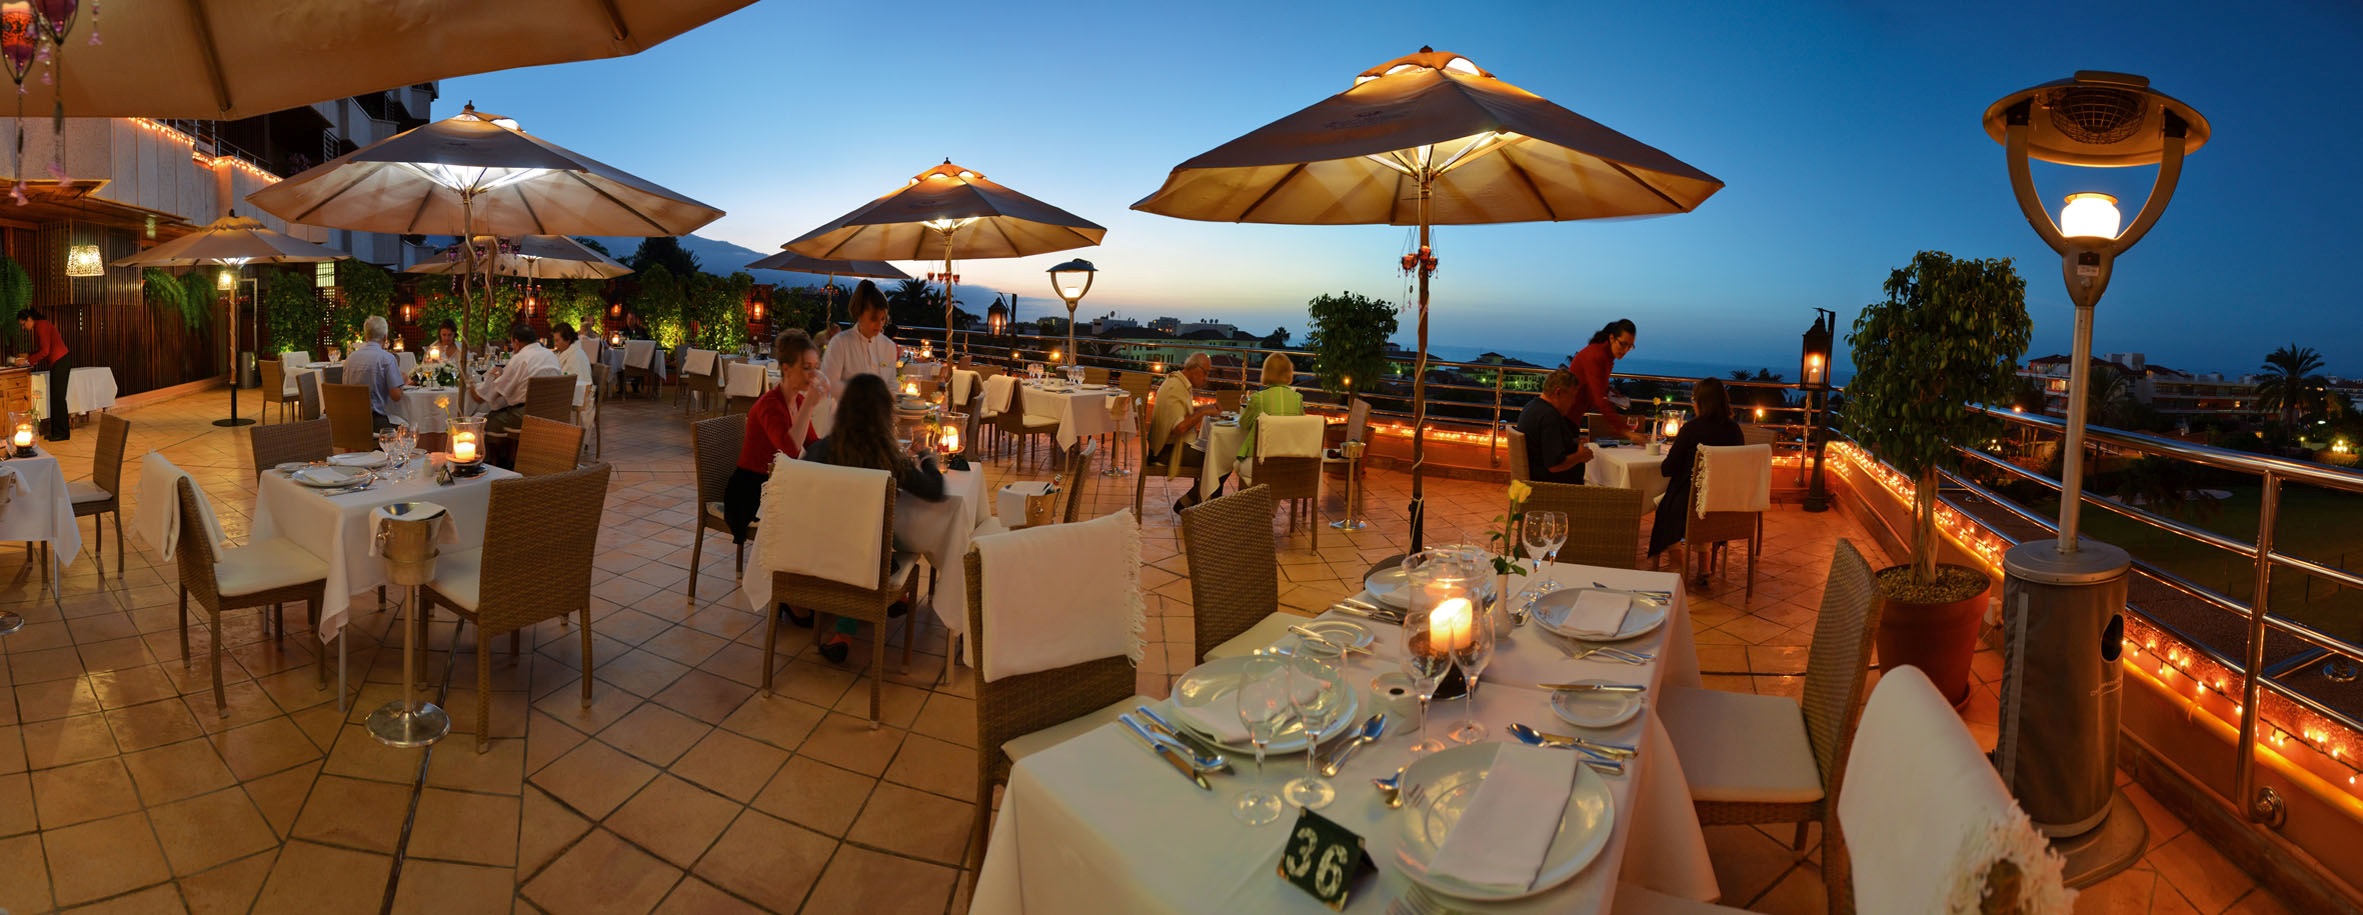 El Hotel Botánico abre la terraza de su famoso restaurante italiano Il Pappagallo para recibir al verano